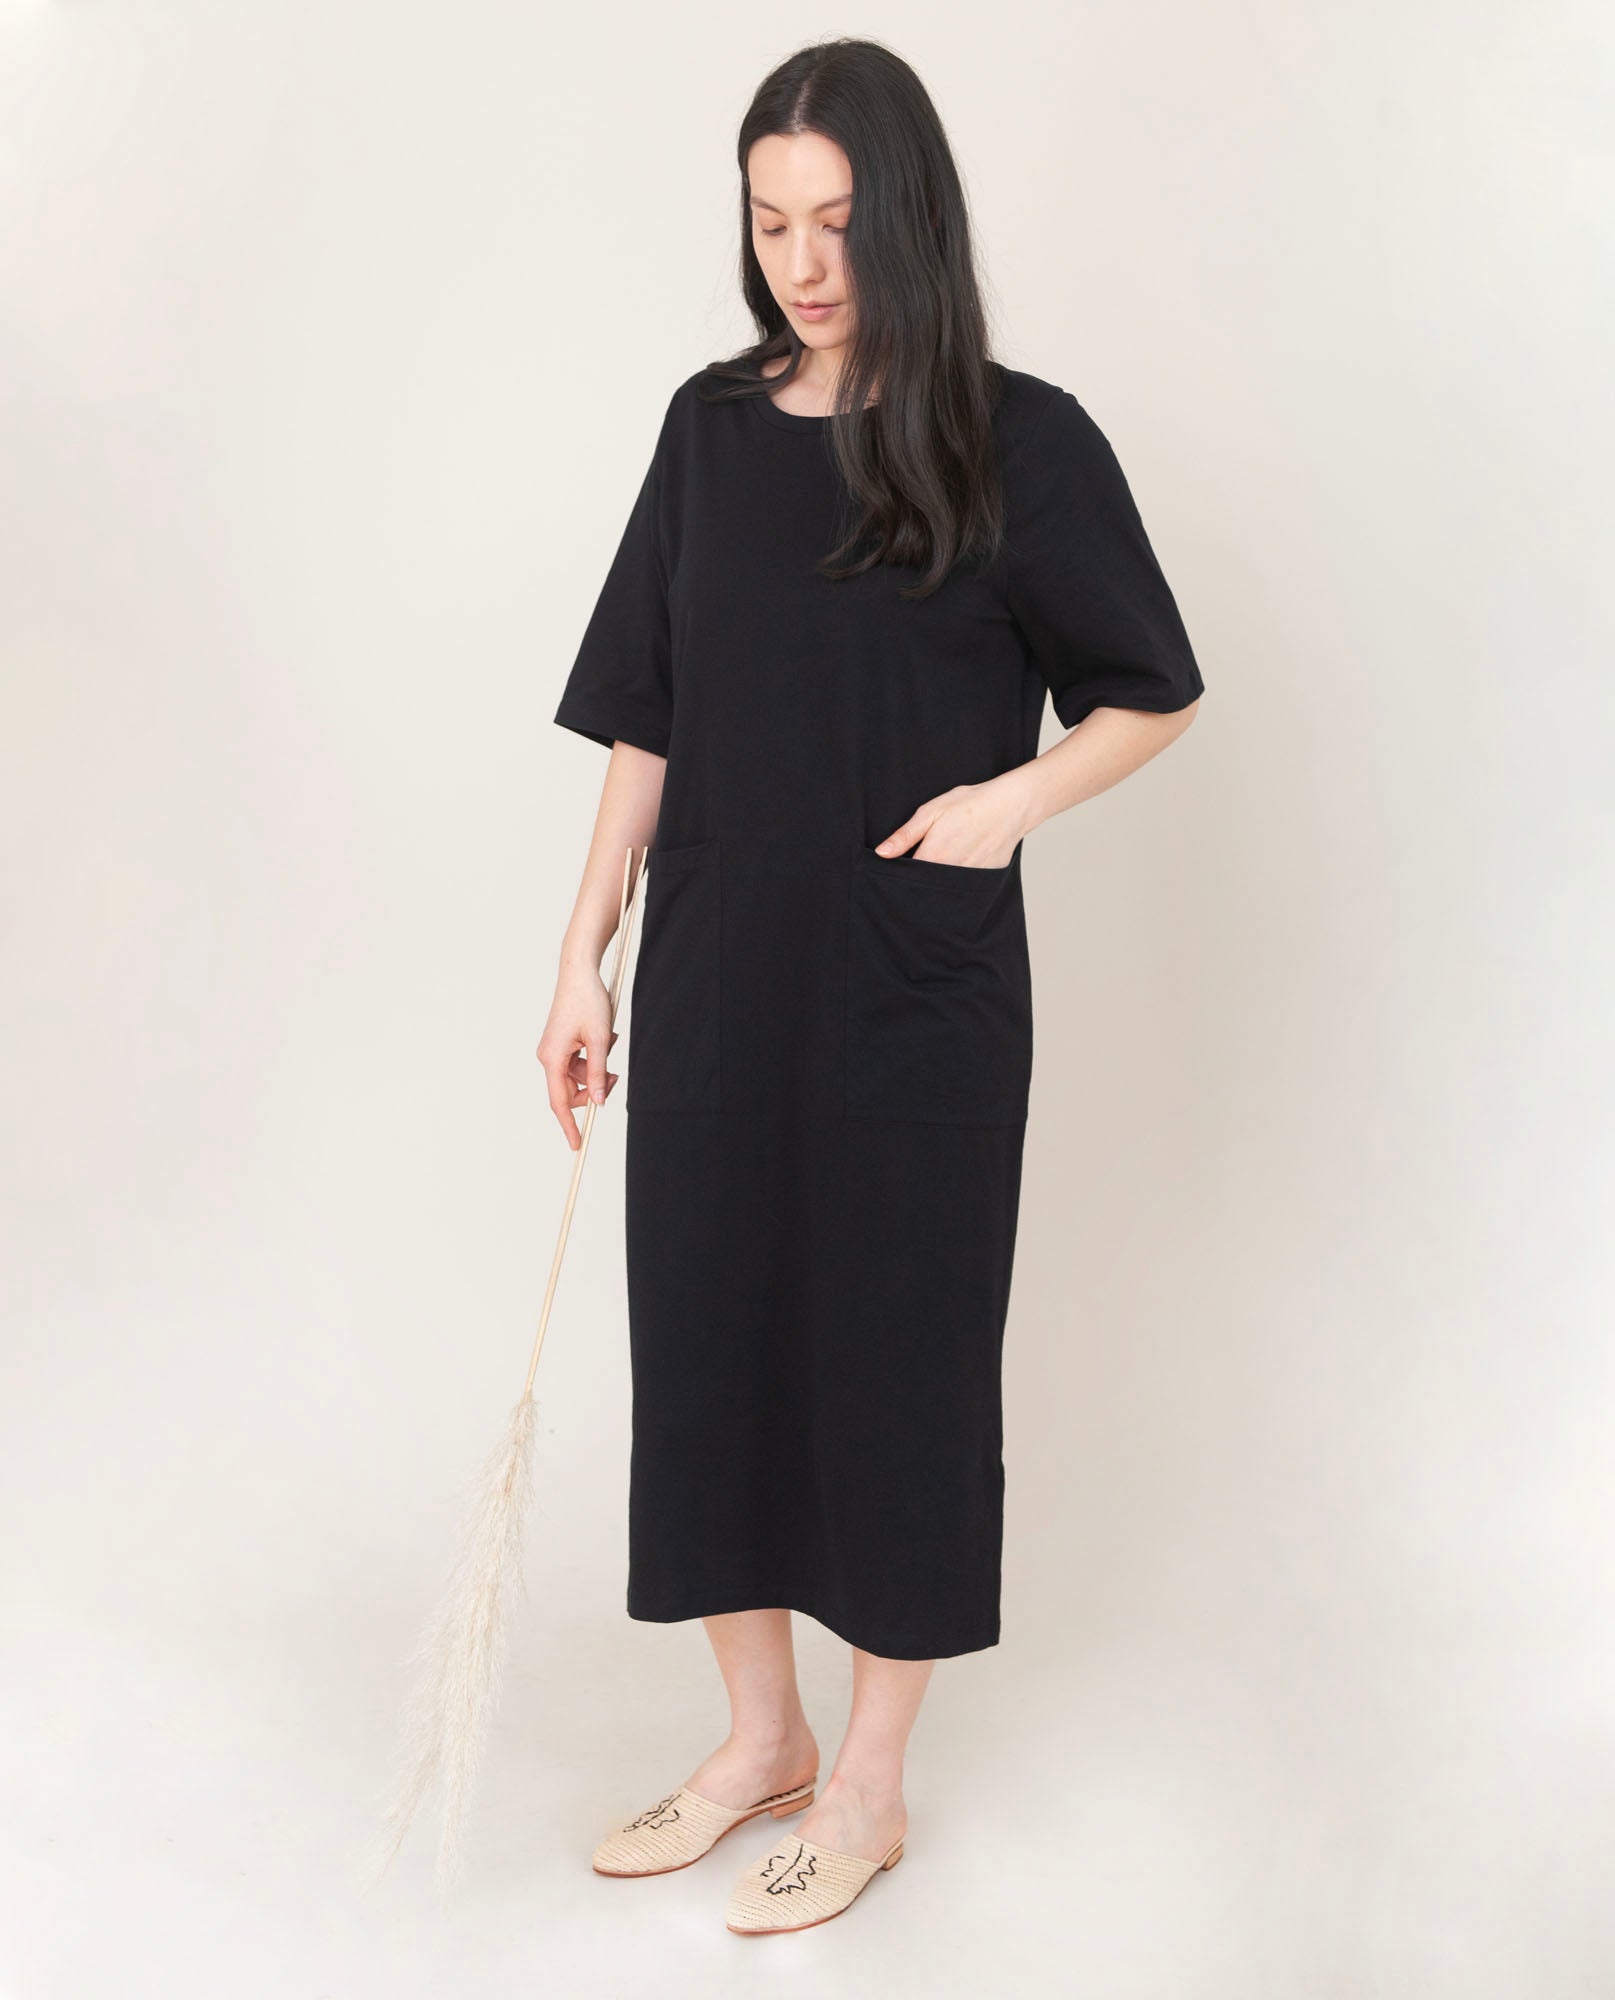 Lillian Organic Cotton Dress in Black XS